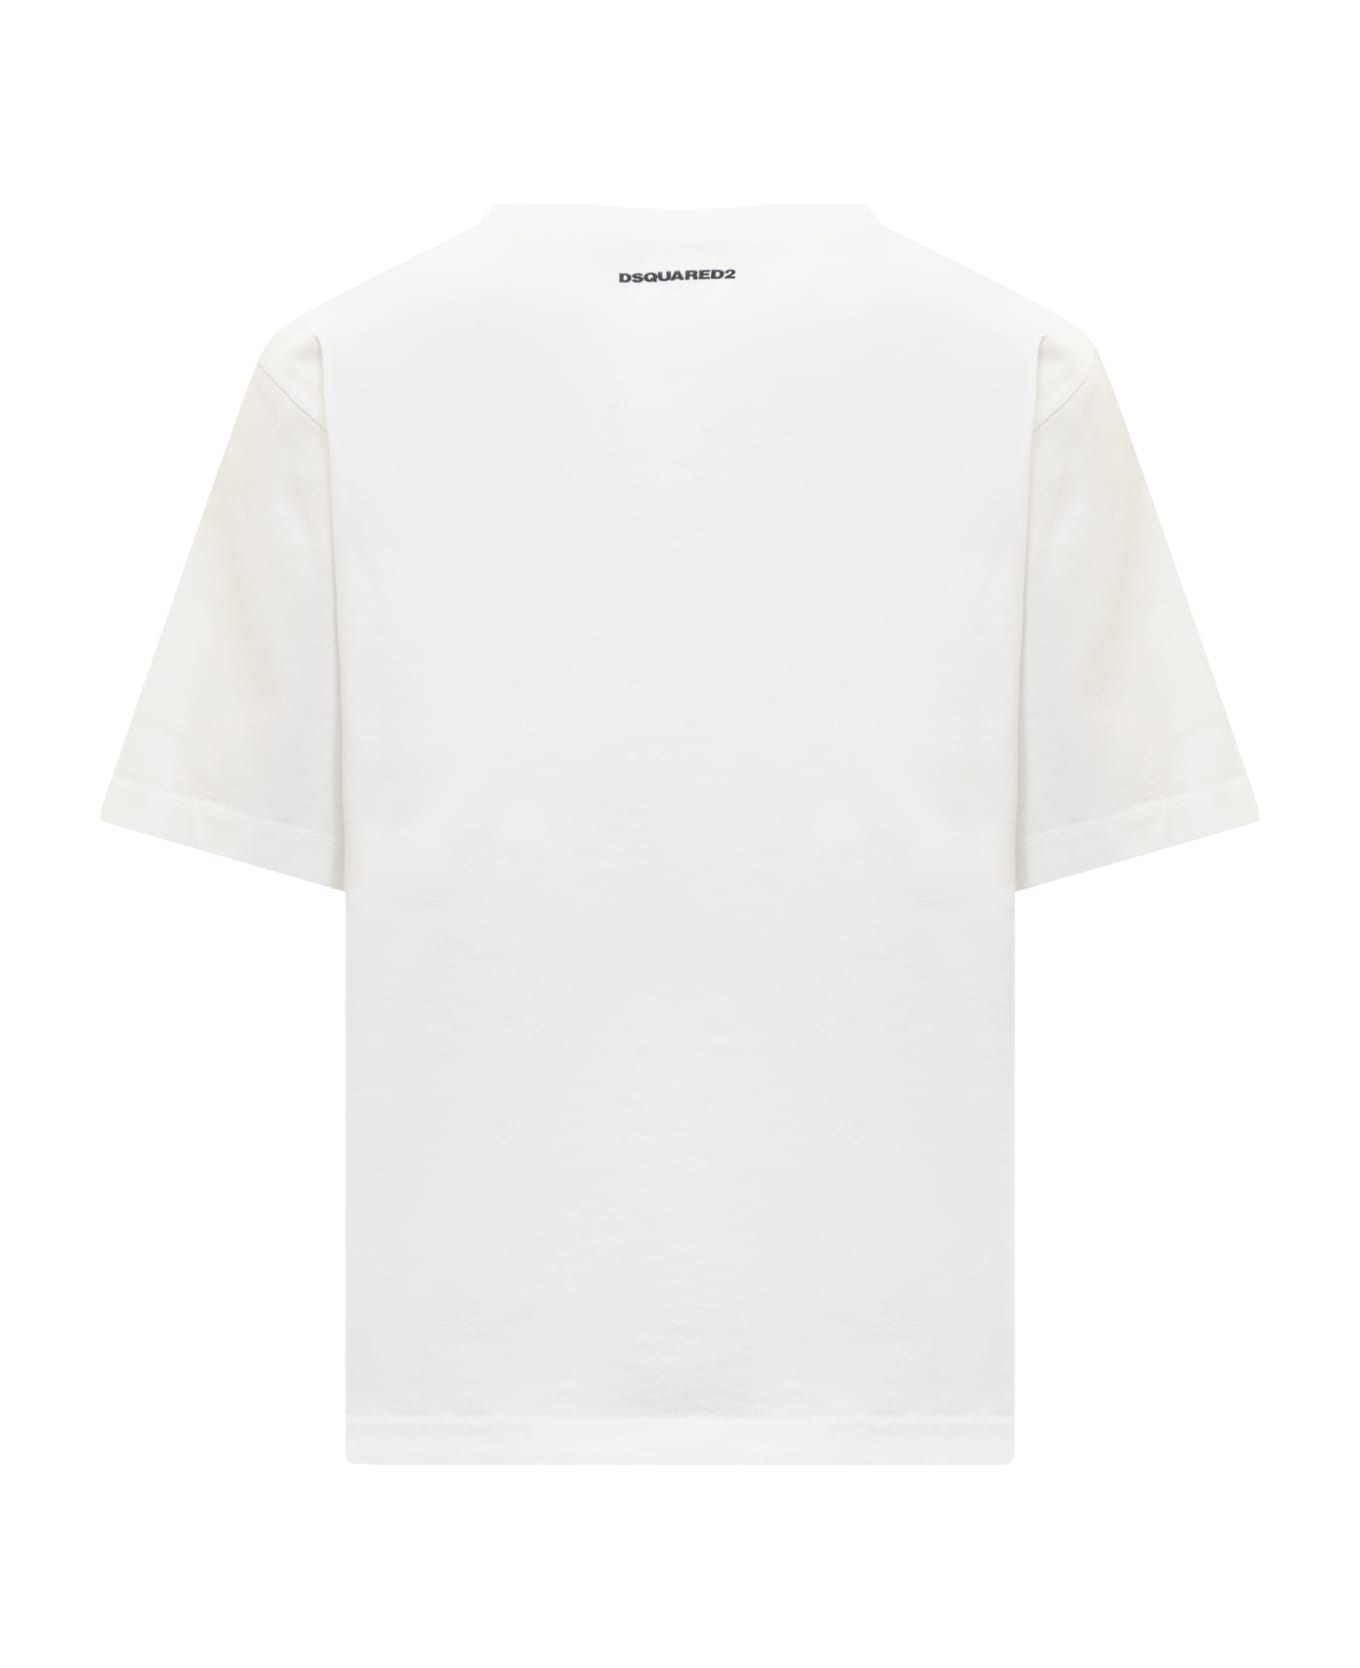 Dsquared2 Sailor Moon T-shirt - WHITE Tシャツ